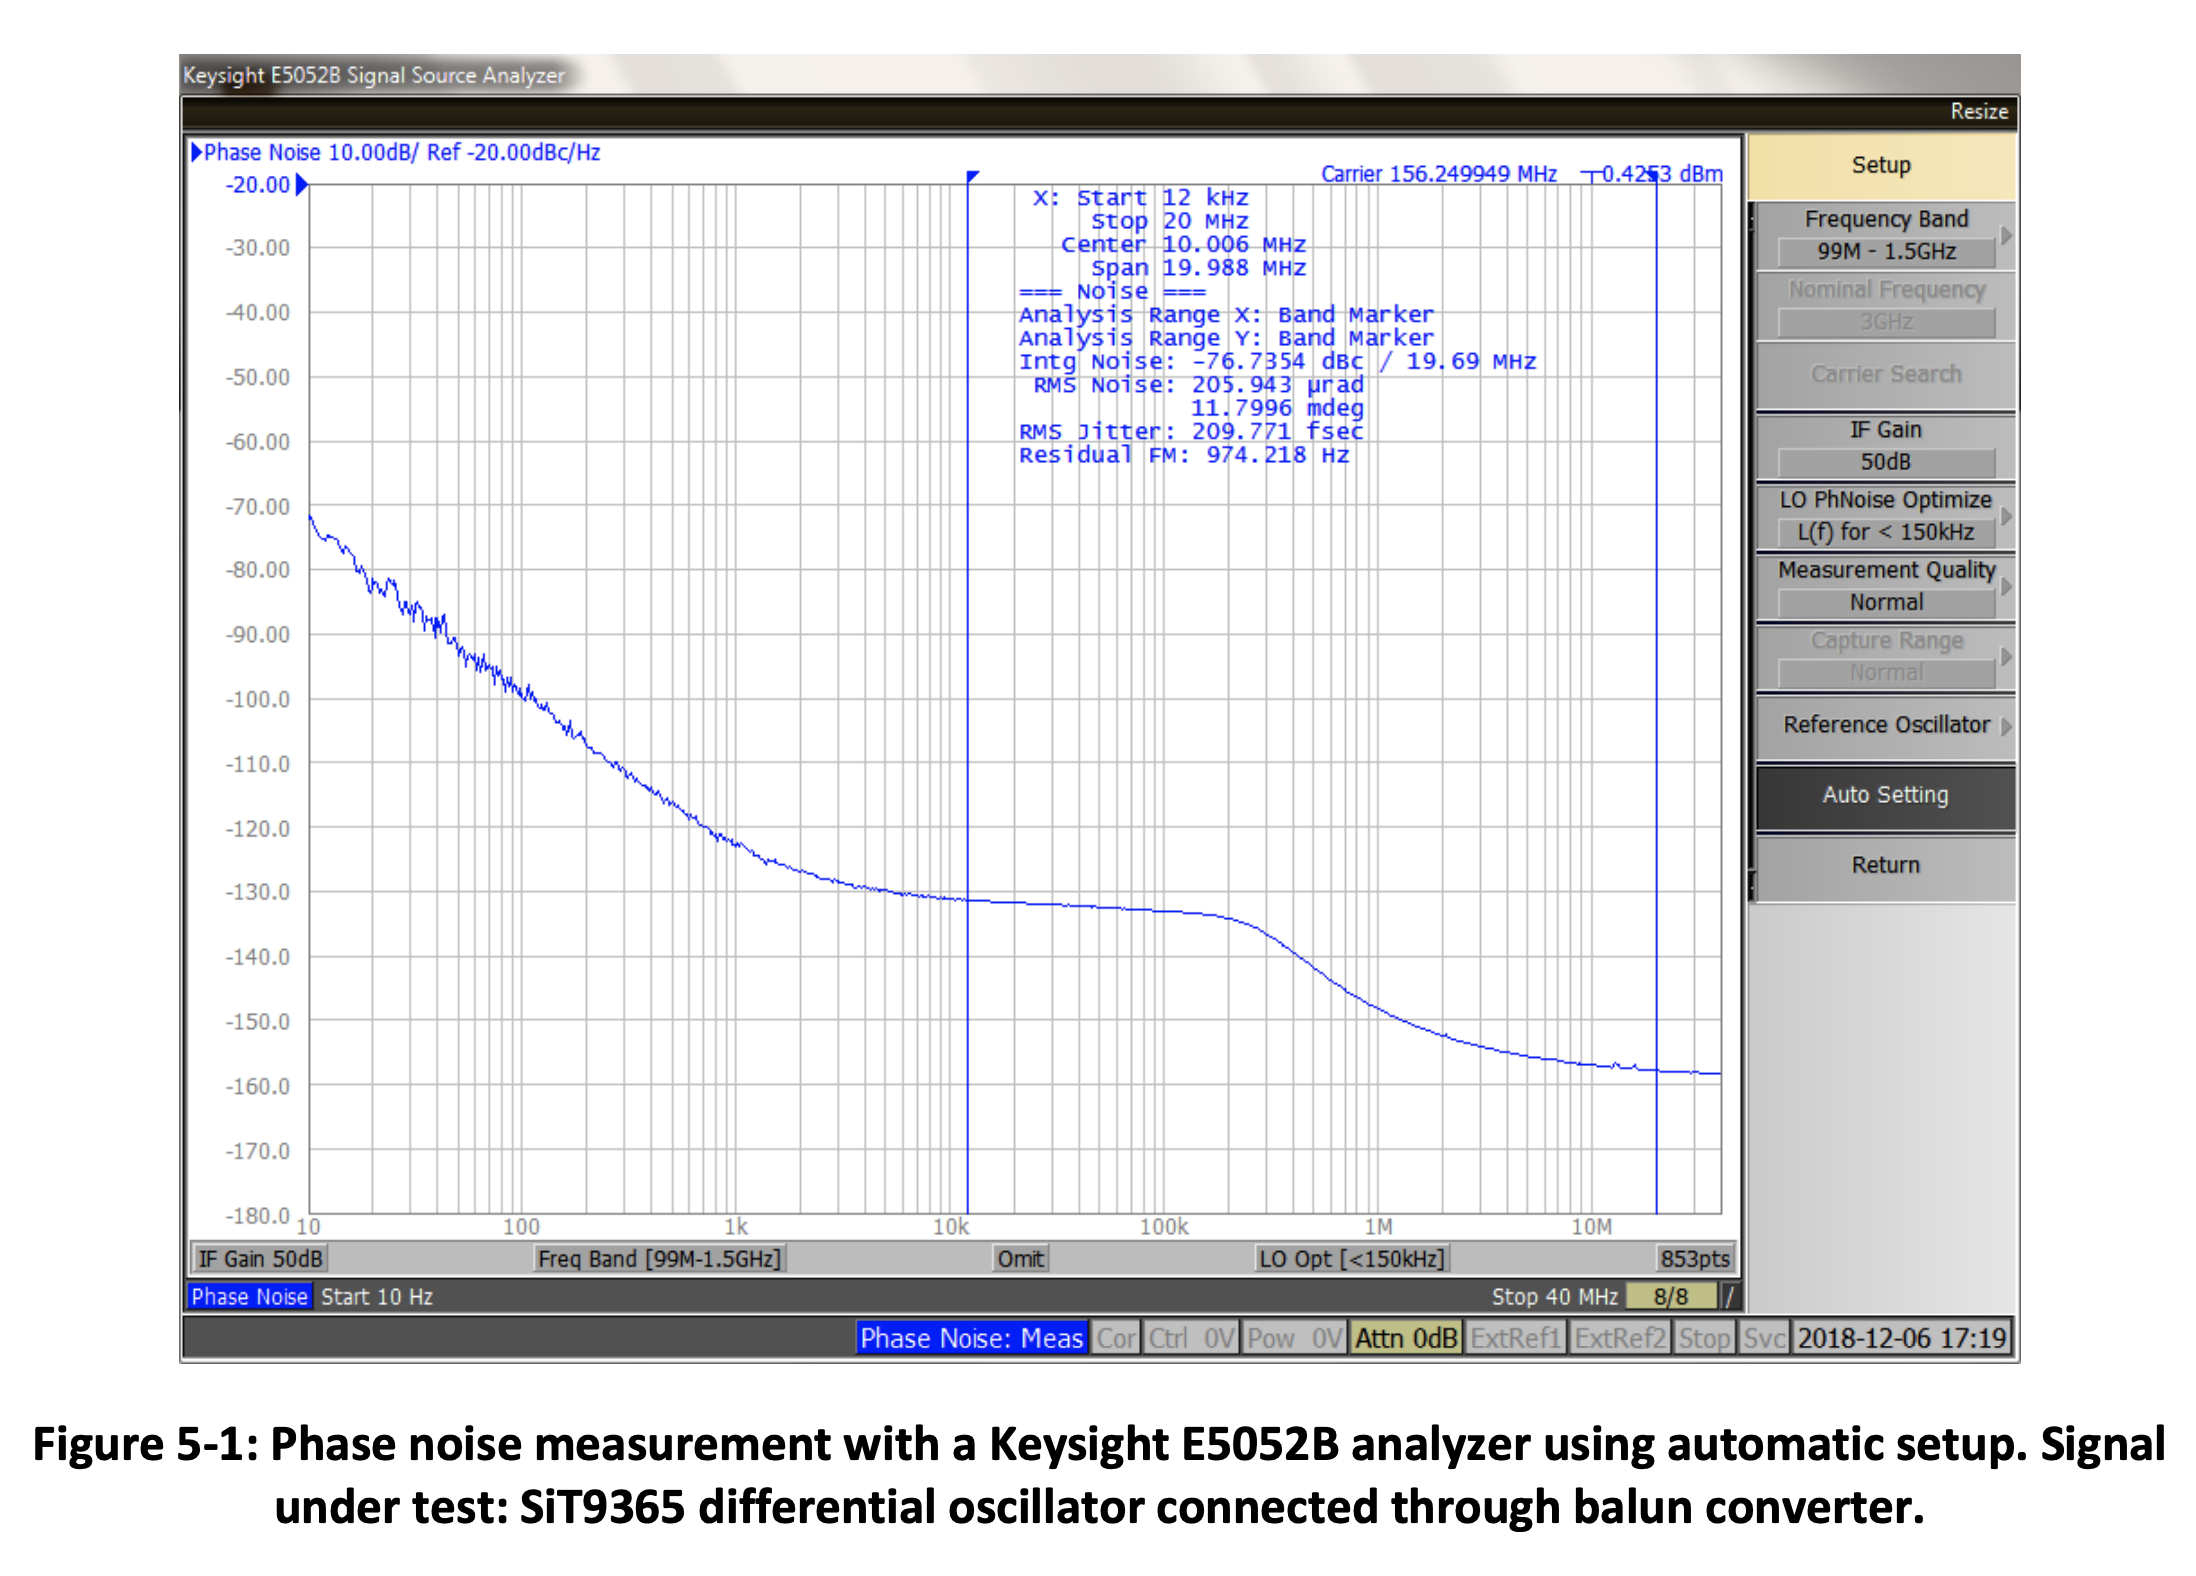 Figure 5-1 Phase noise measurement with a Keysight E5052B analyzer